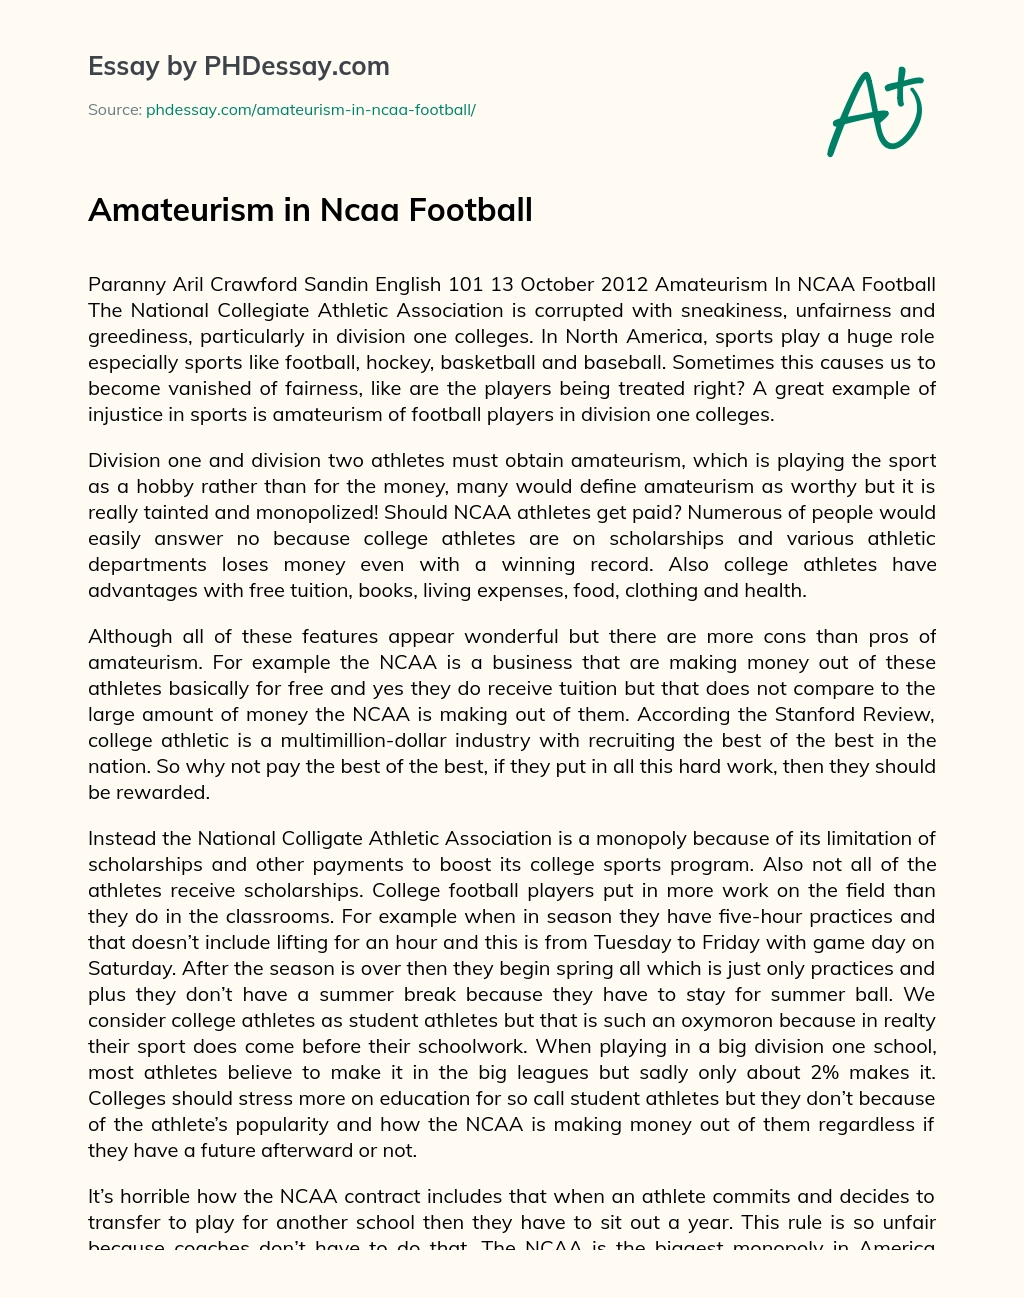 Amateurism in Ncaa Football essay